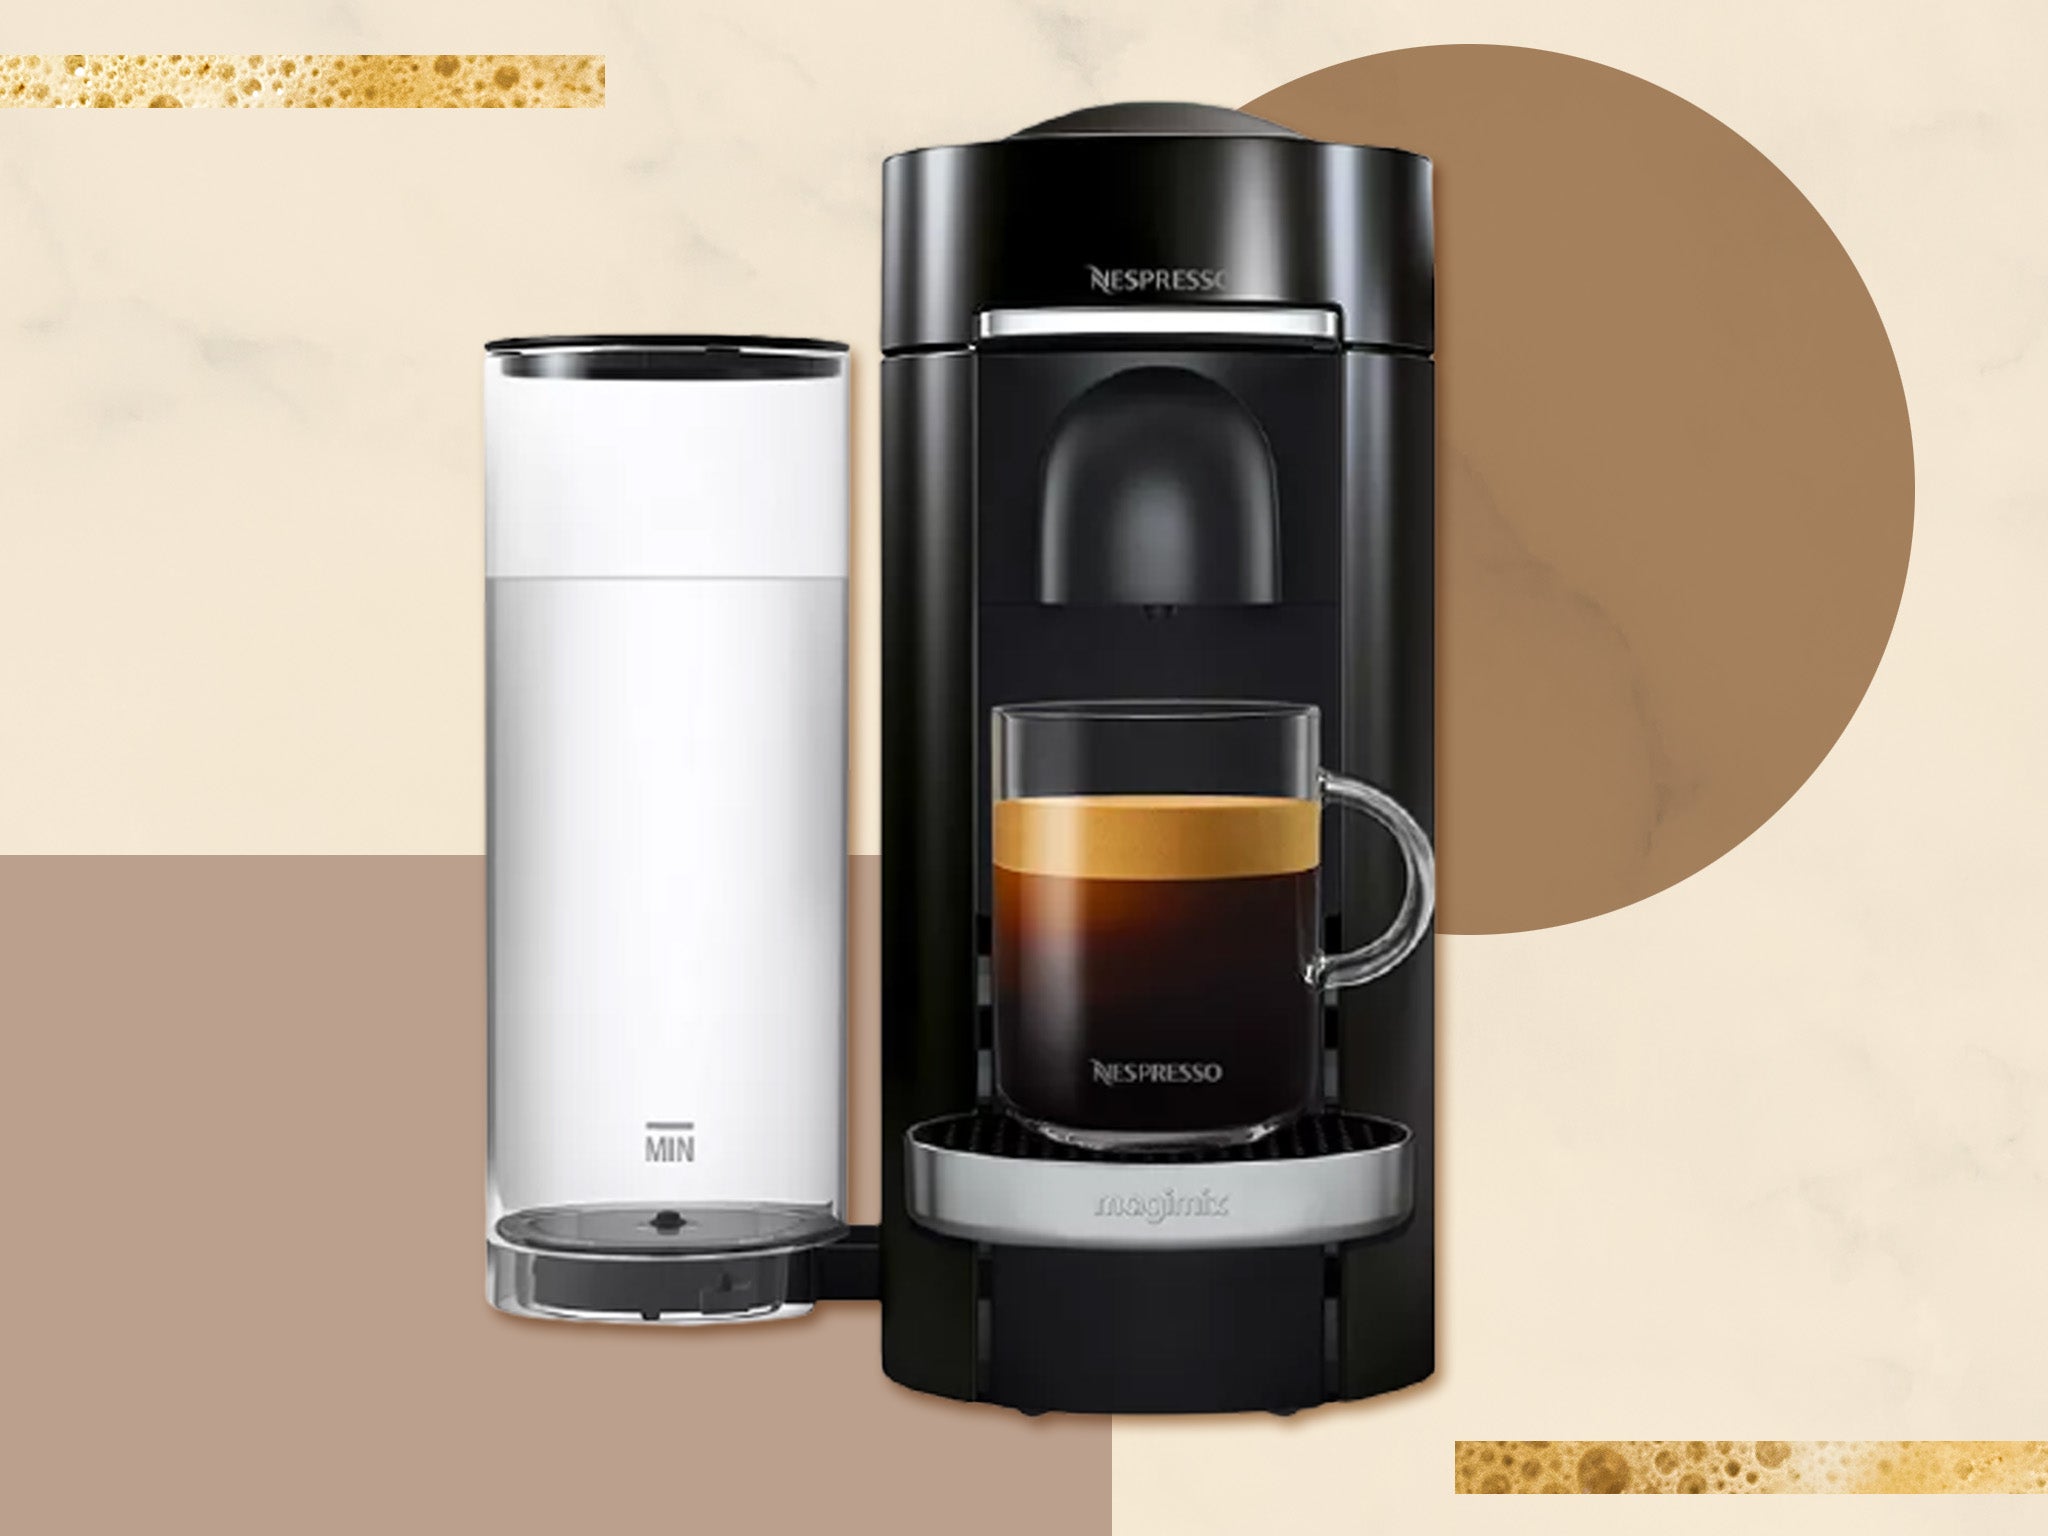 https://static.independent.co.uk/2021/11/26/14/Nespresso%20vertuoplus%20coffee%20machine%20review%20copy.jpg